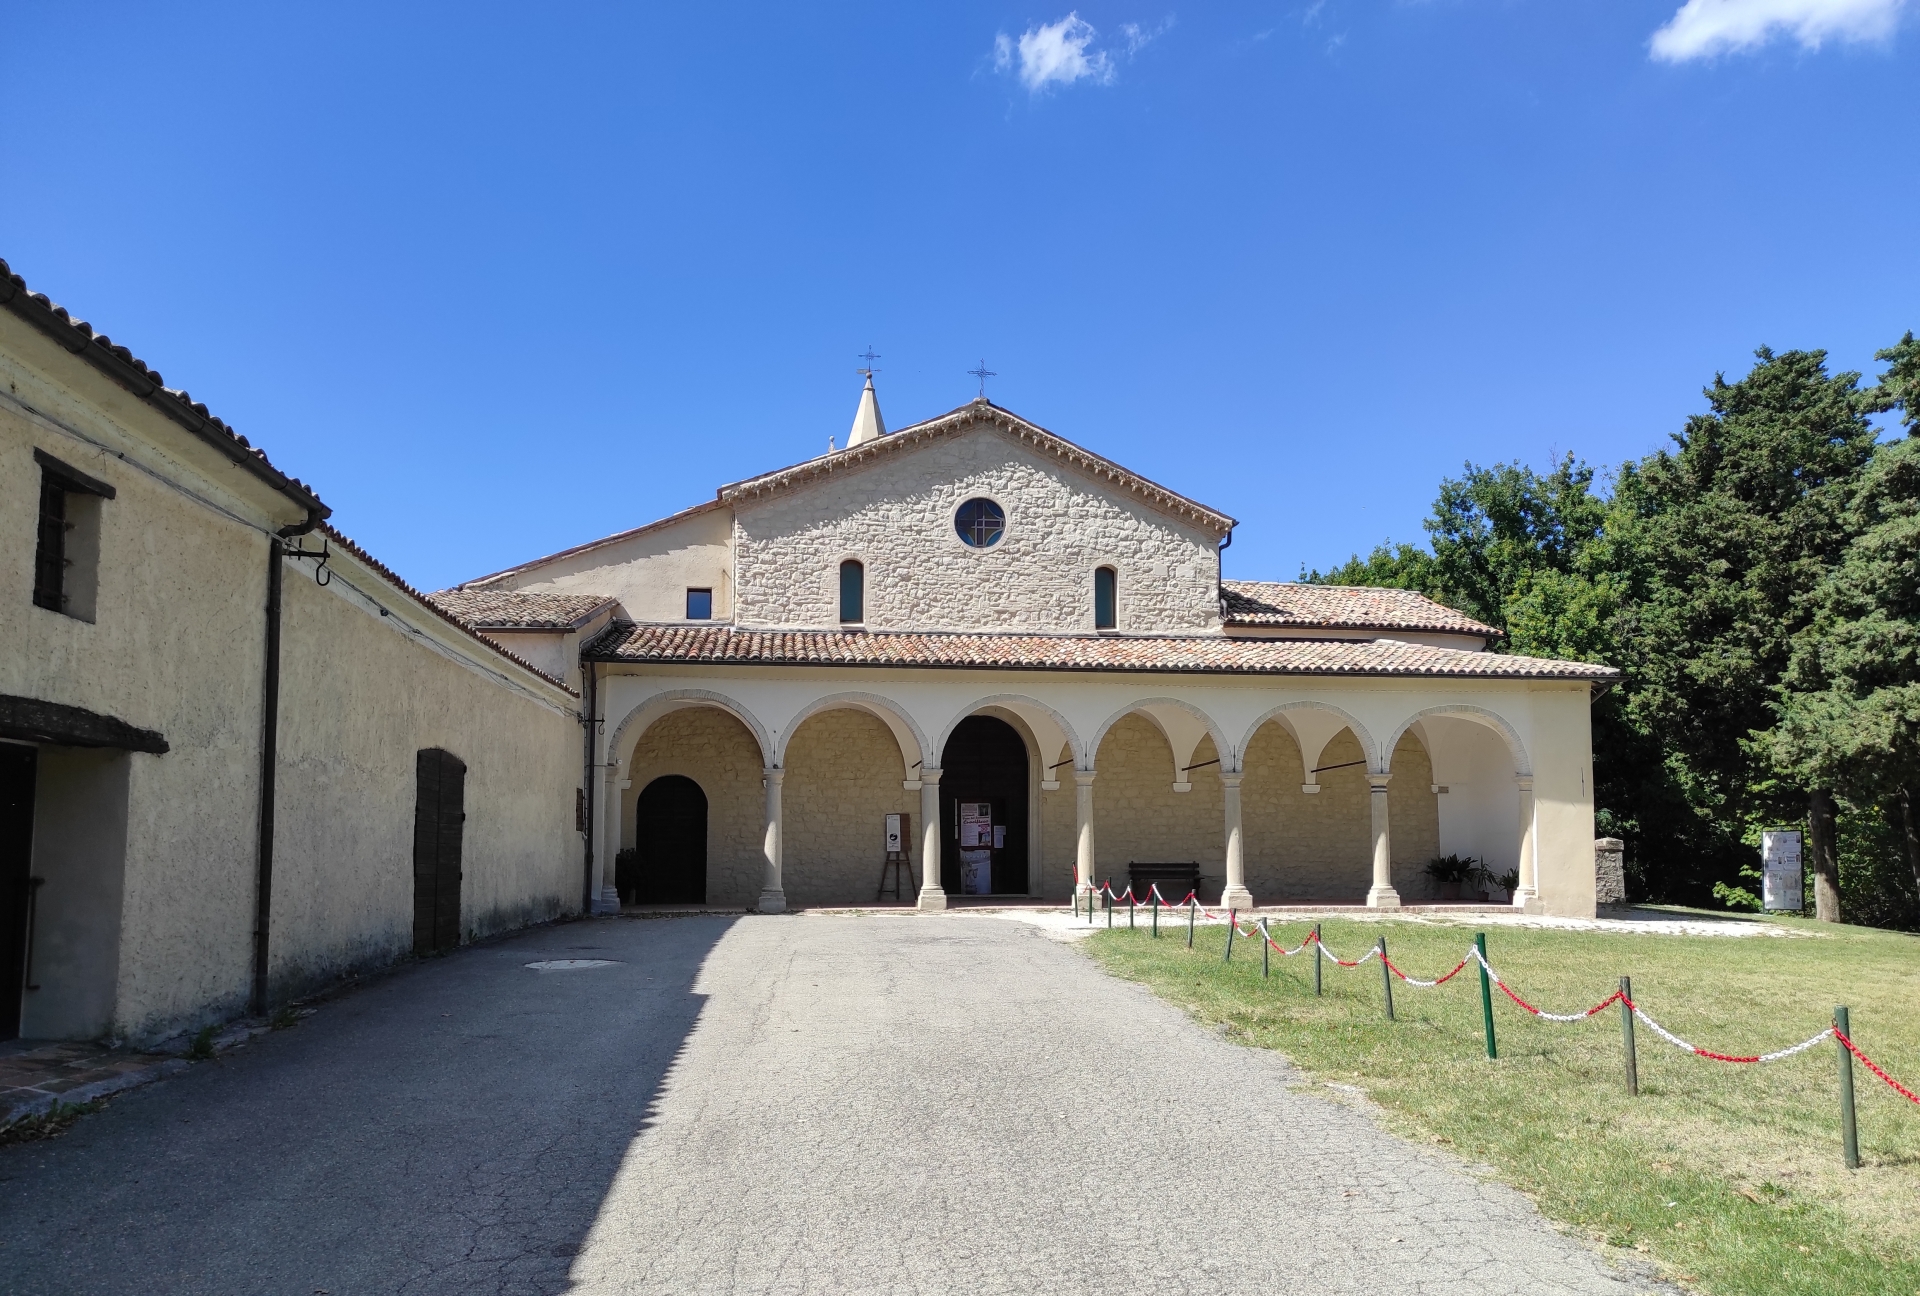 Chiesa Montemaggio photos de Albano Sgarbi